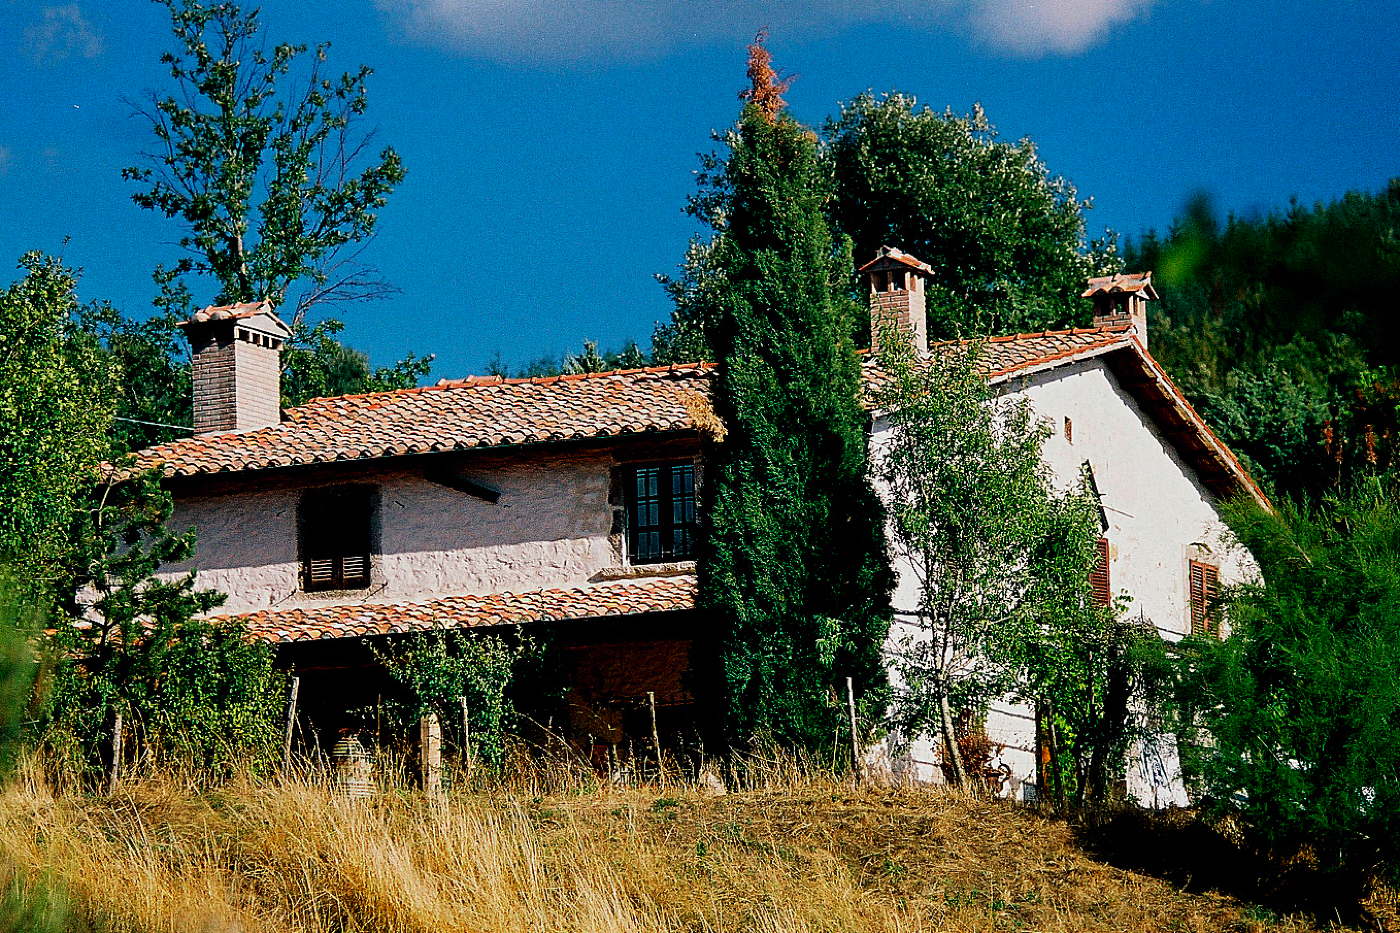 rental villa-holiday rental-vacation villa in Italy-Tuscany